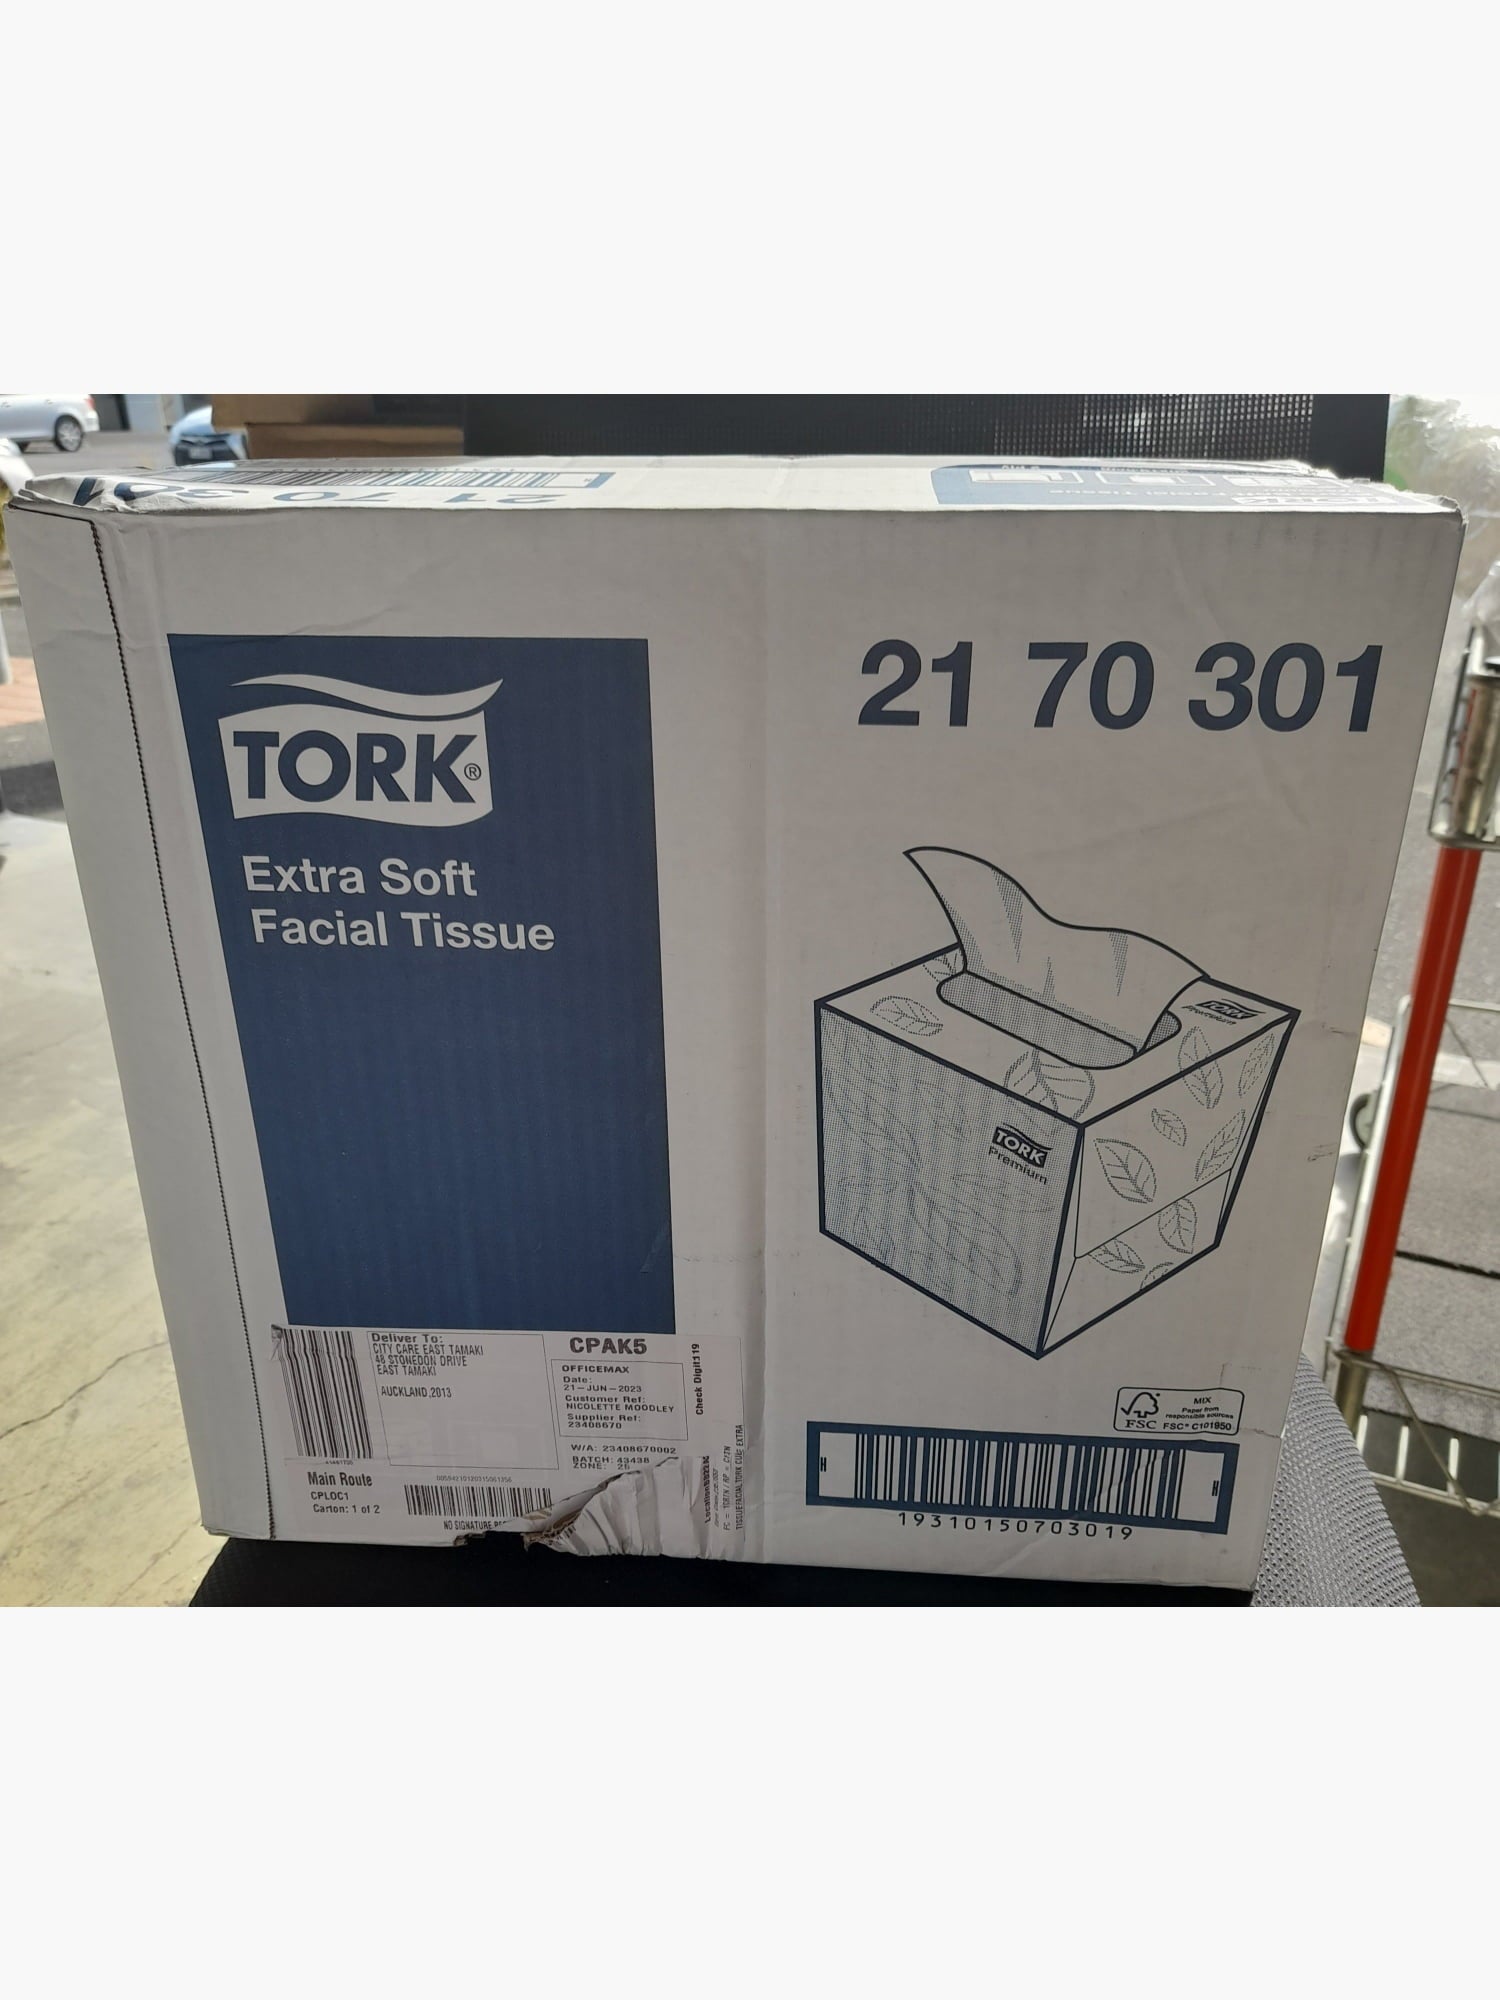 Tork - Facial Tissue - Cube - 21 70 301